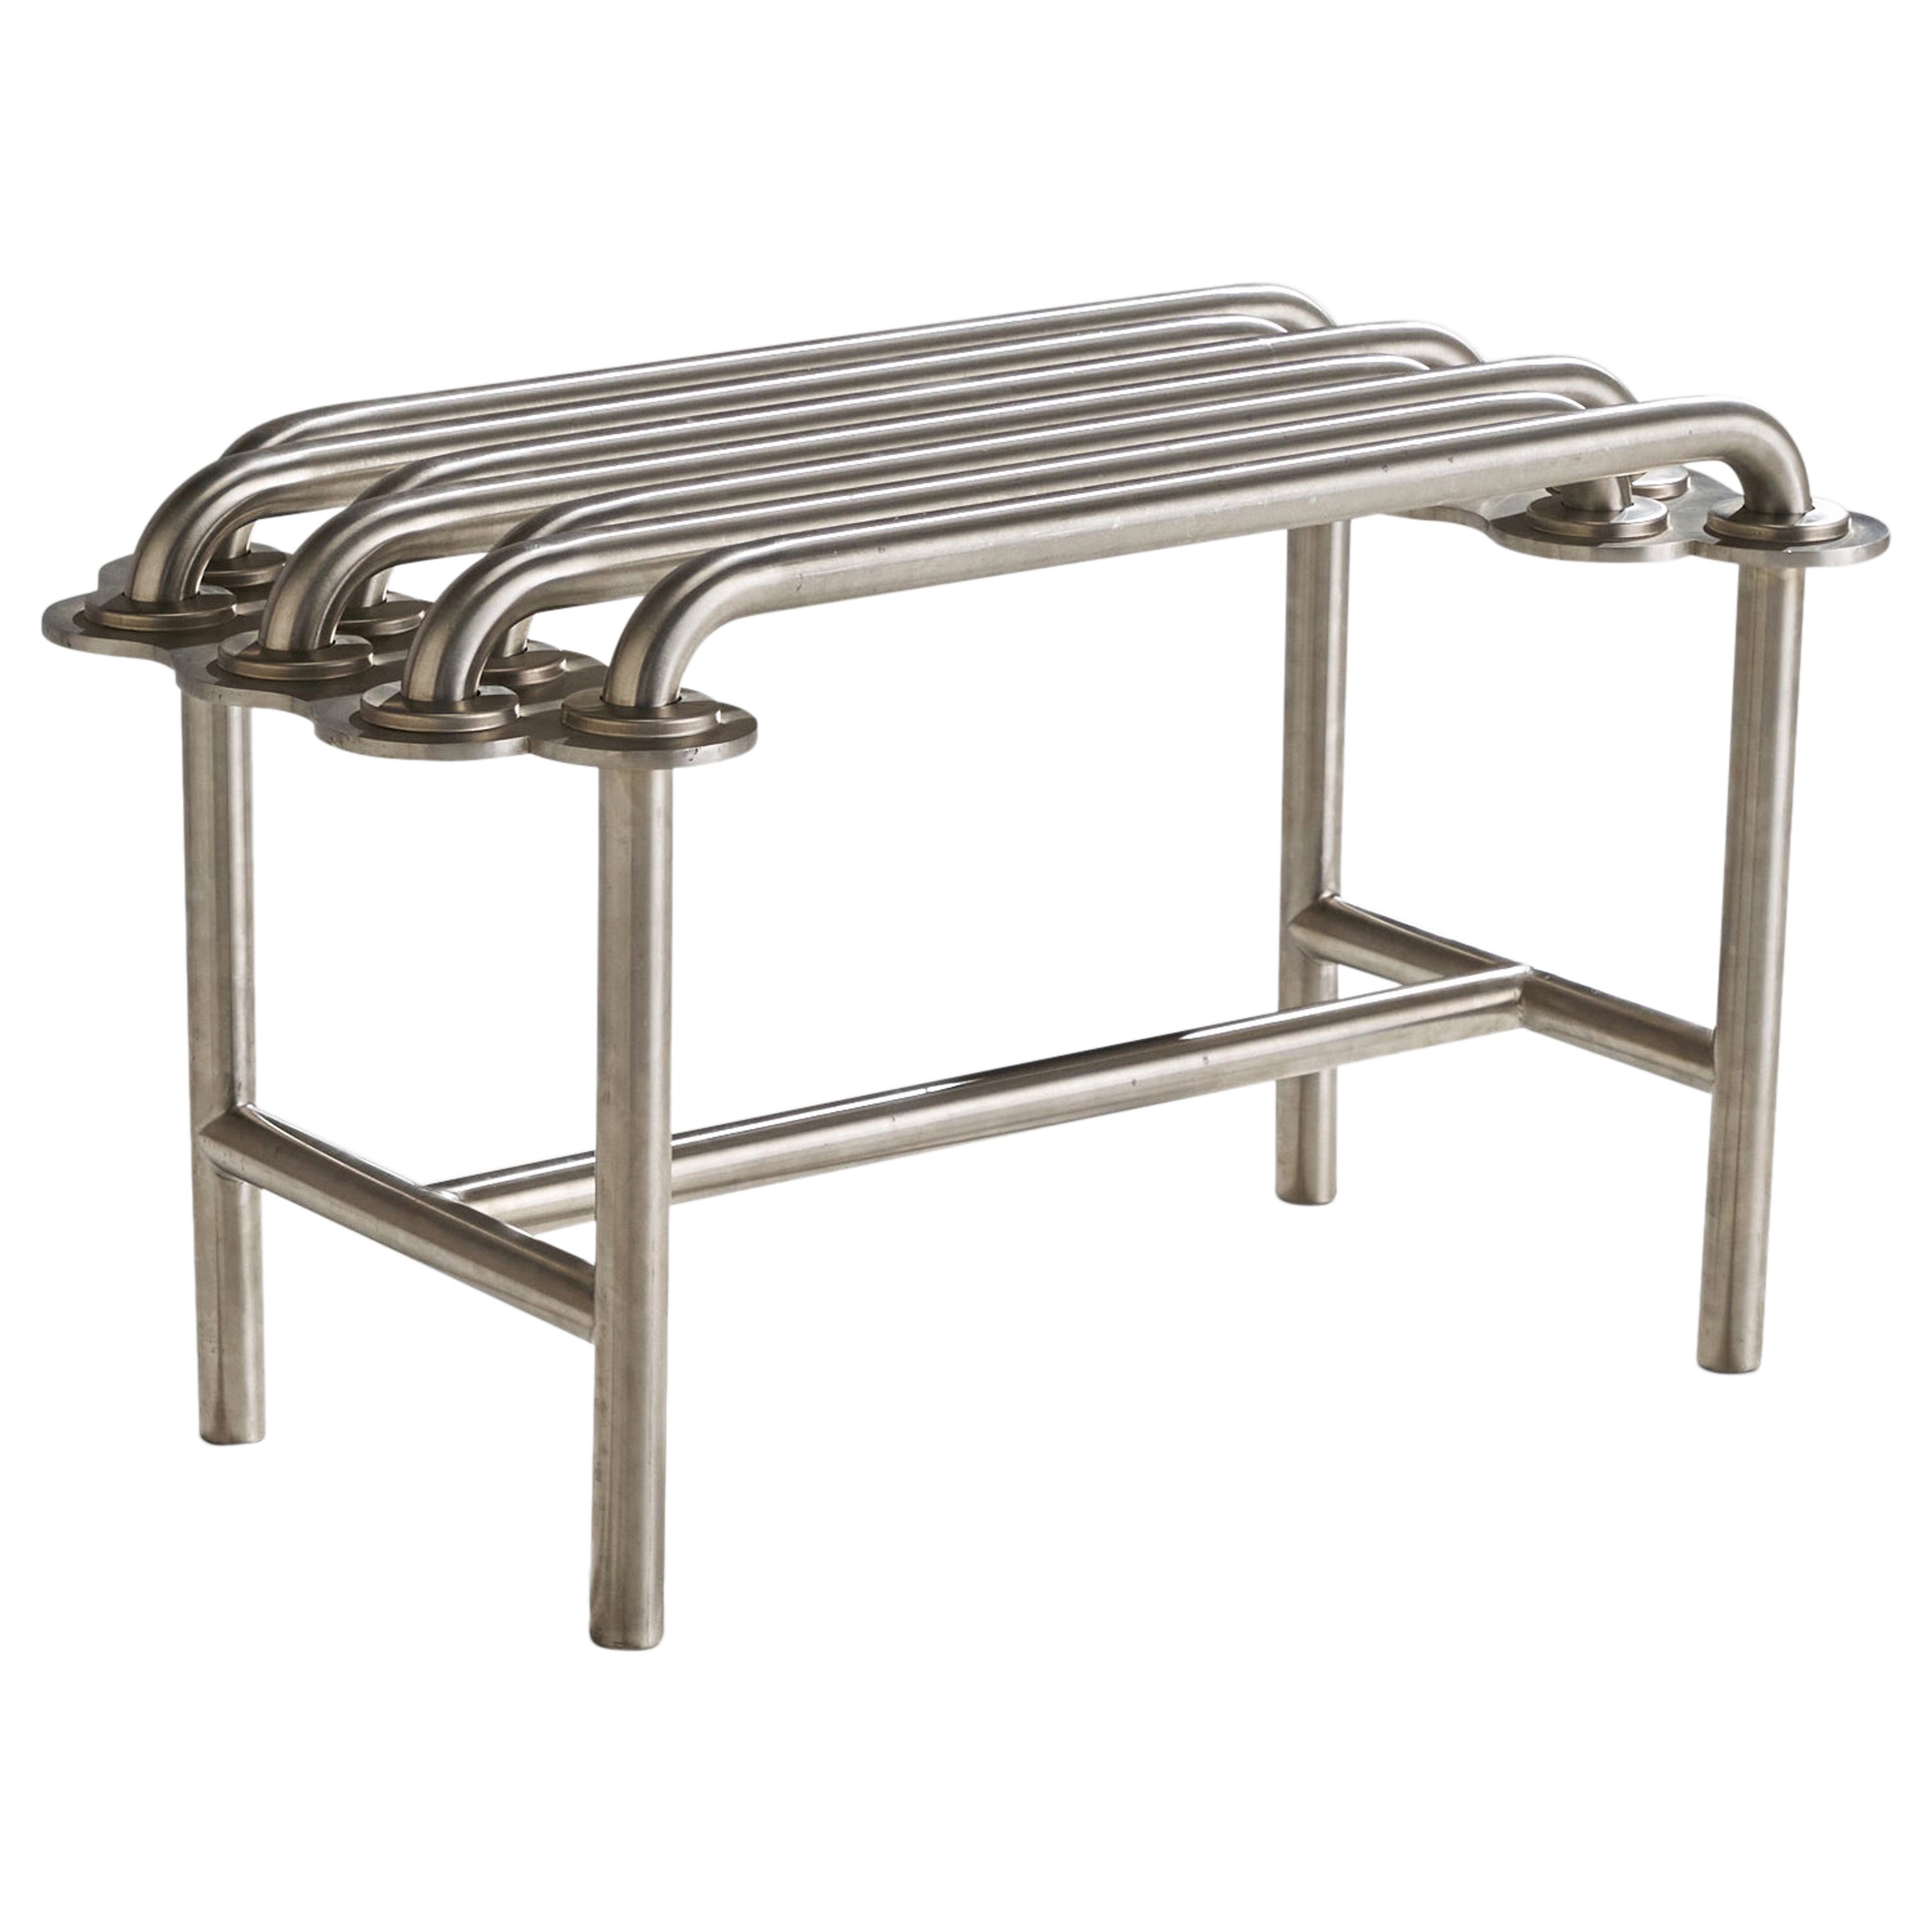 Jim Drain, Unique Bench, Stainless Steel, Aluminium, USA 2000s For Sale